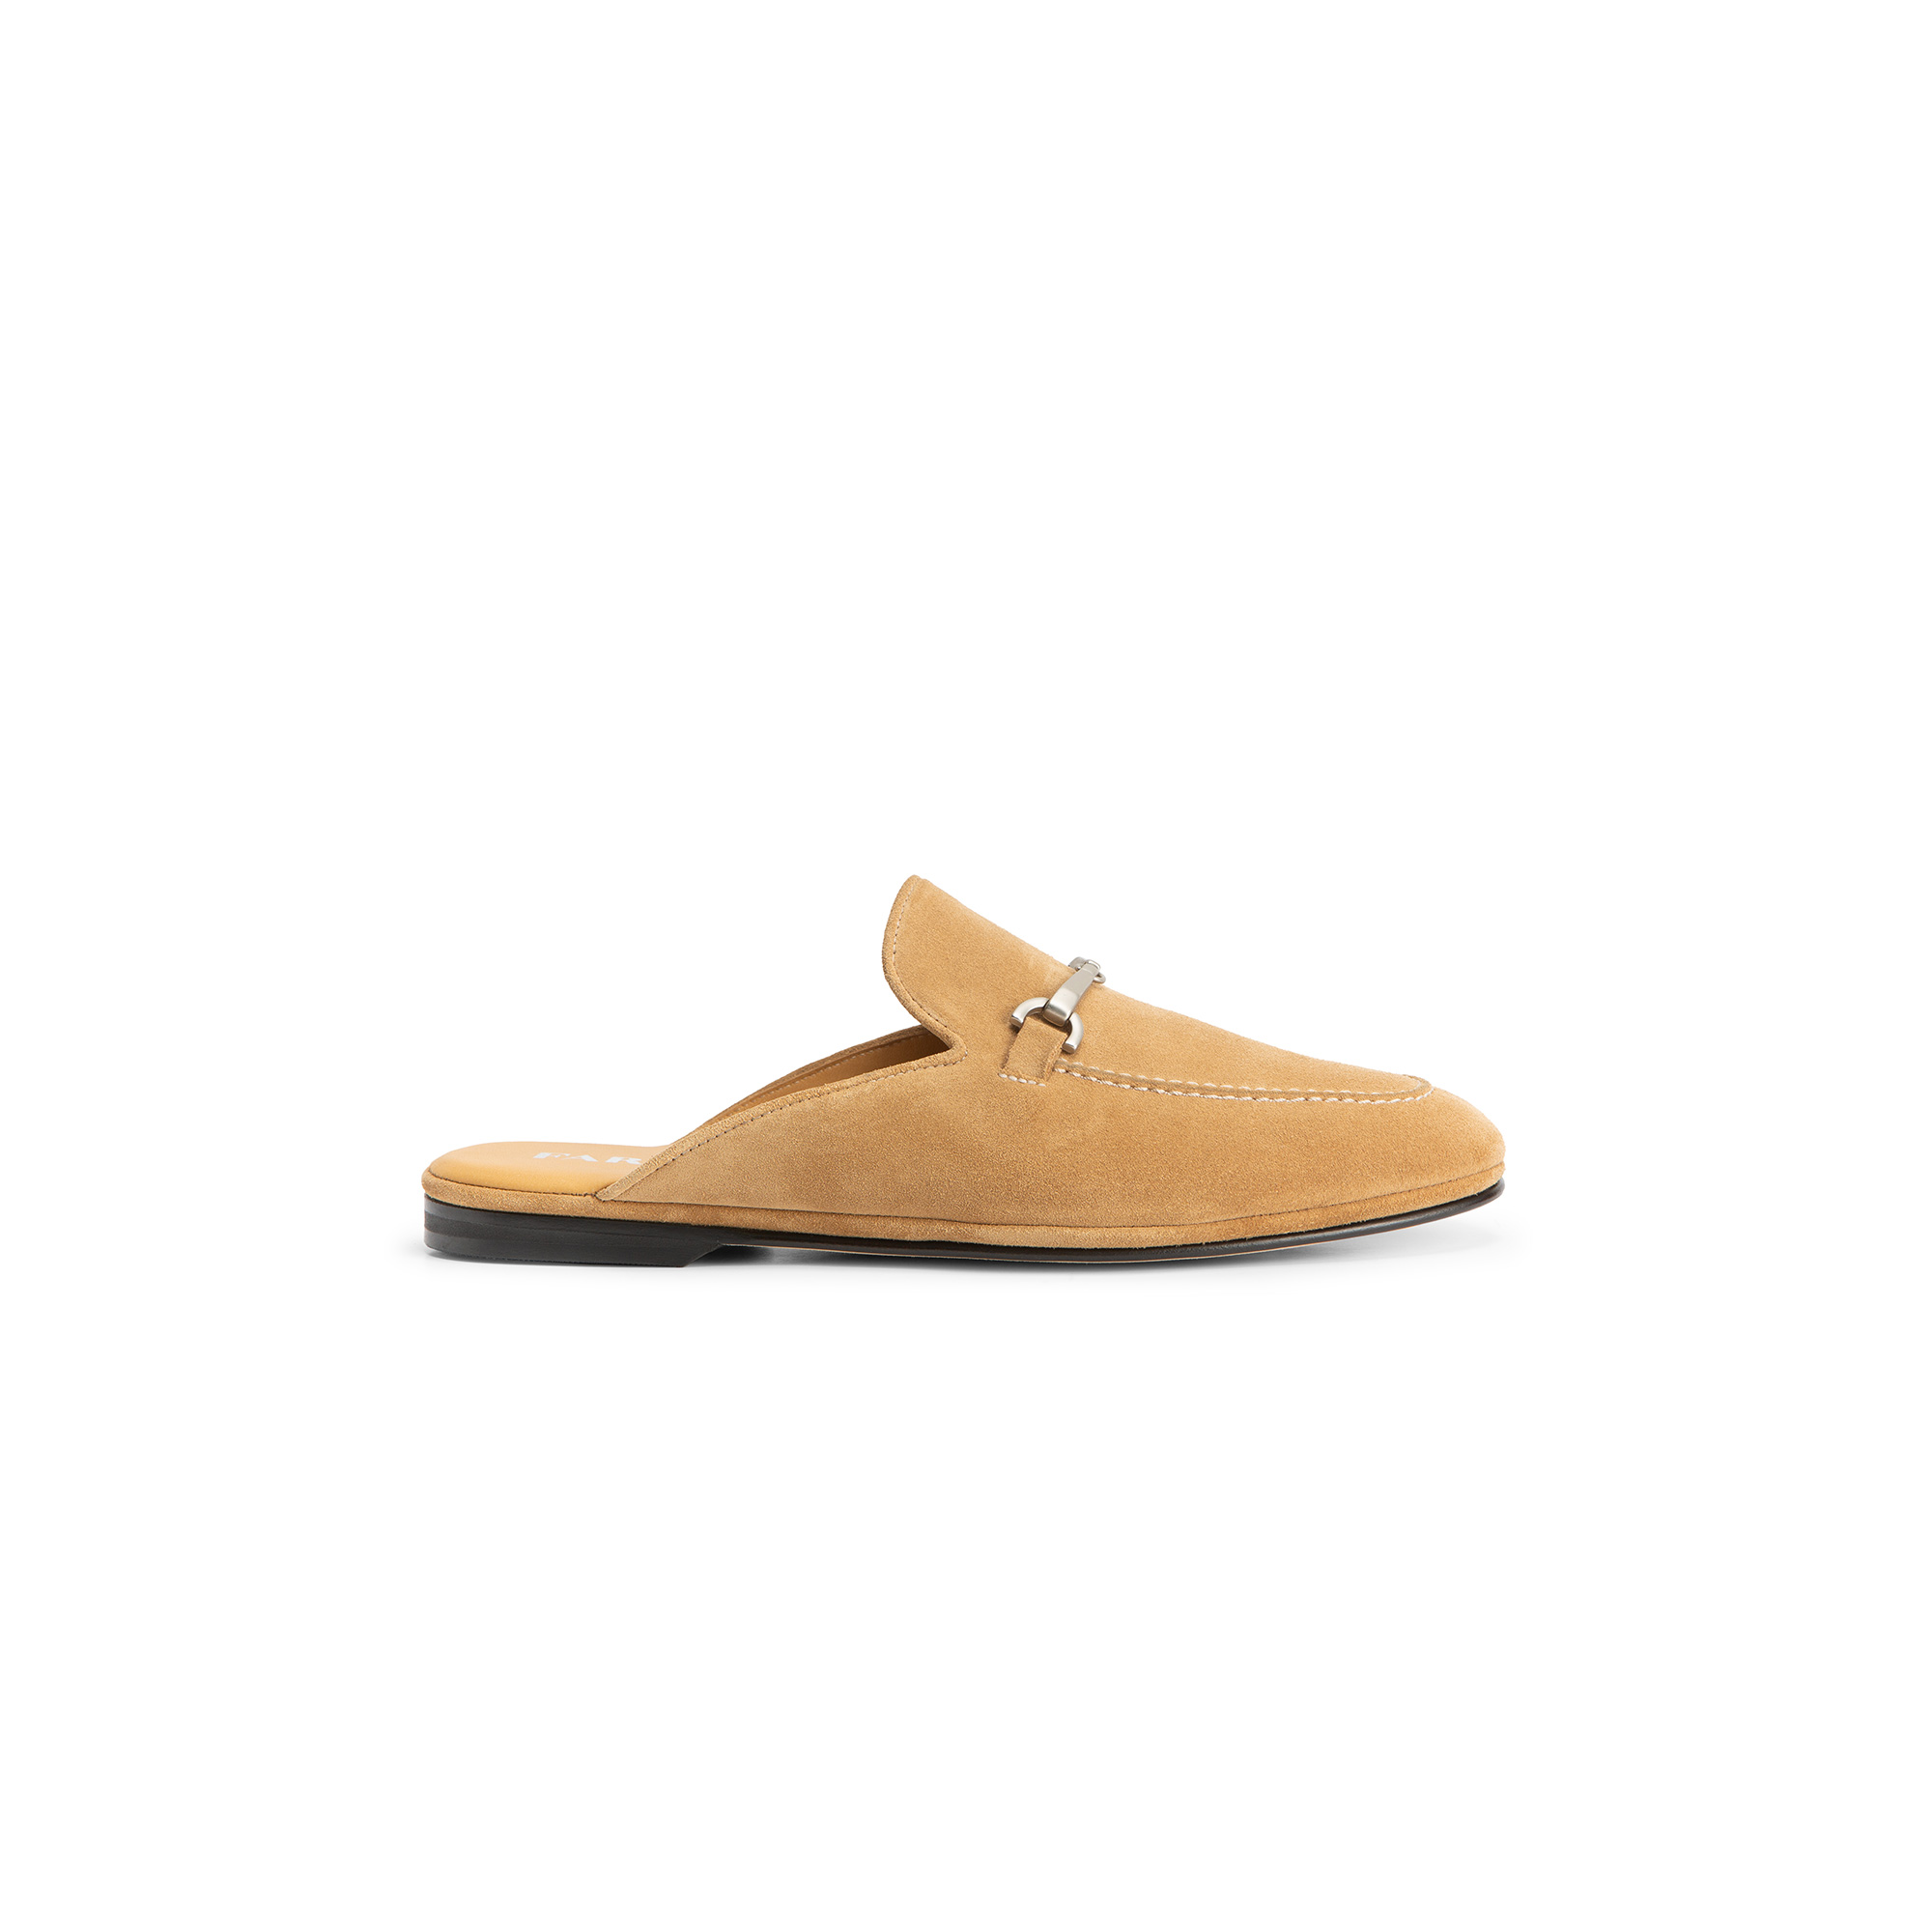 Pantofola esterno aperta velour nude - Farfalla italian slippers